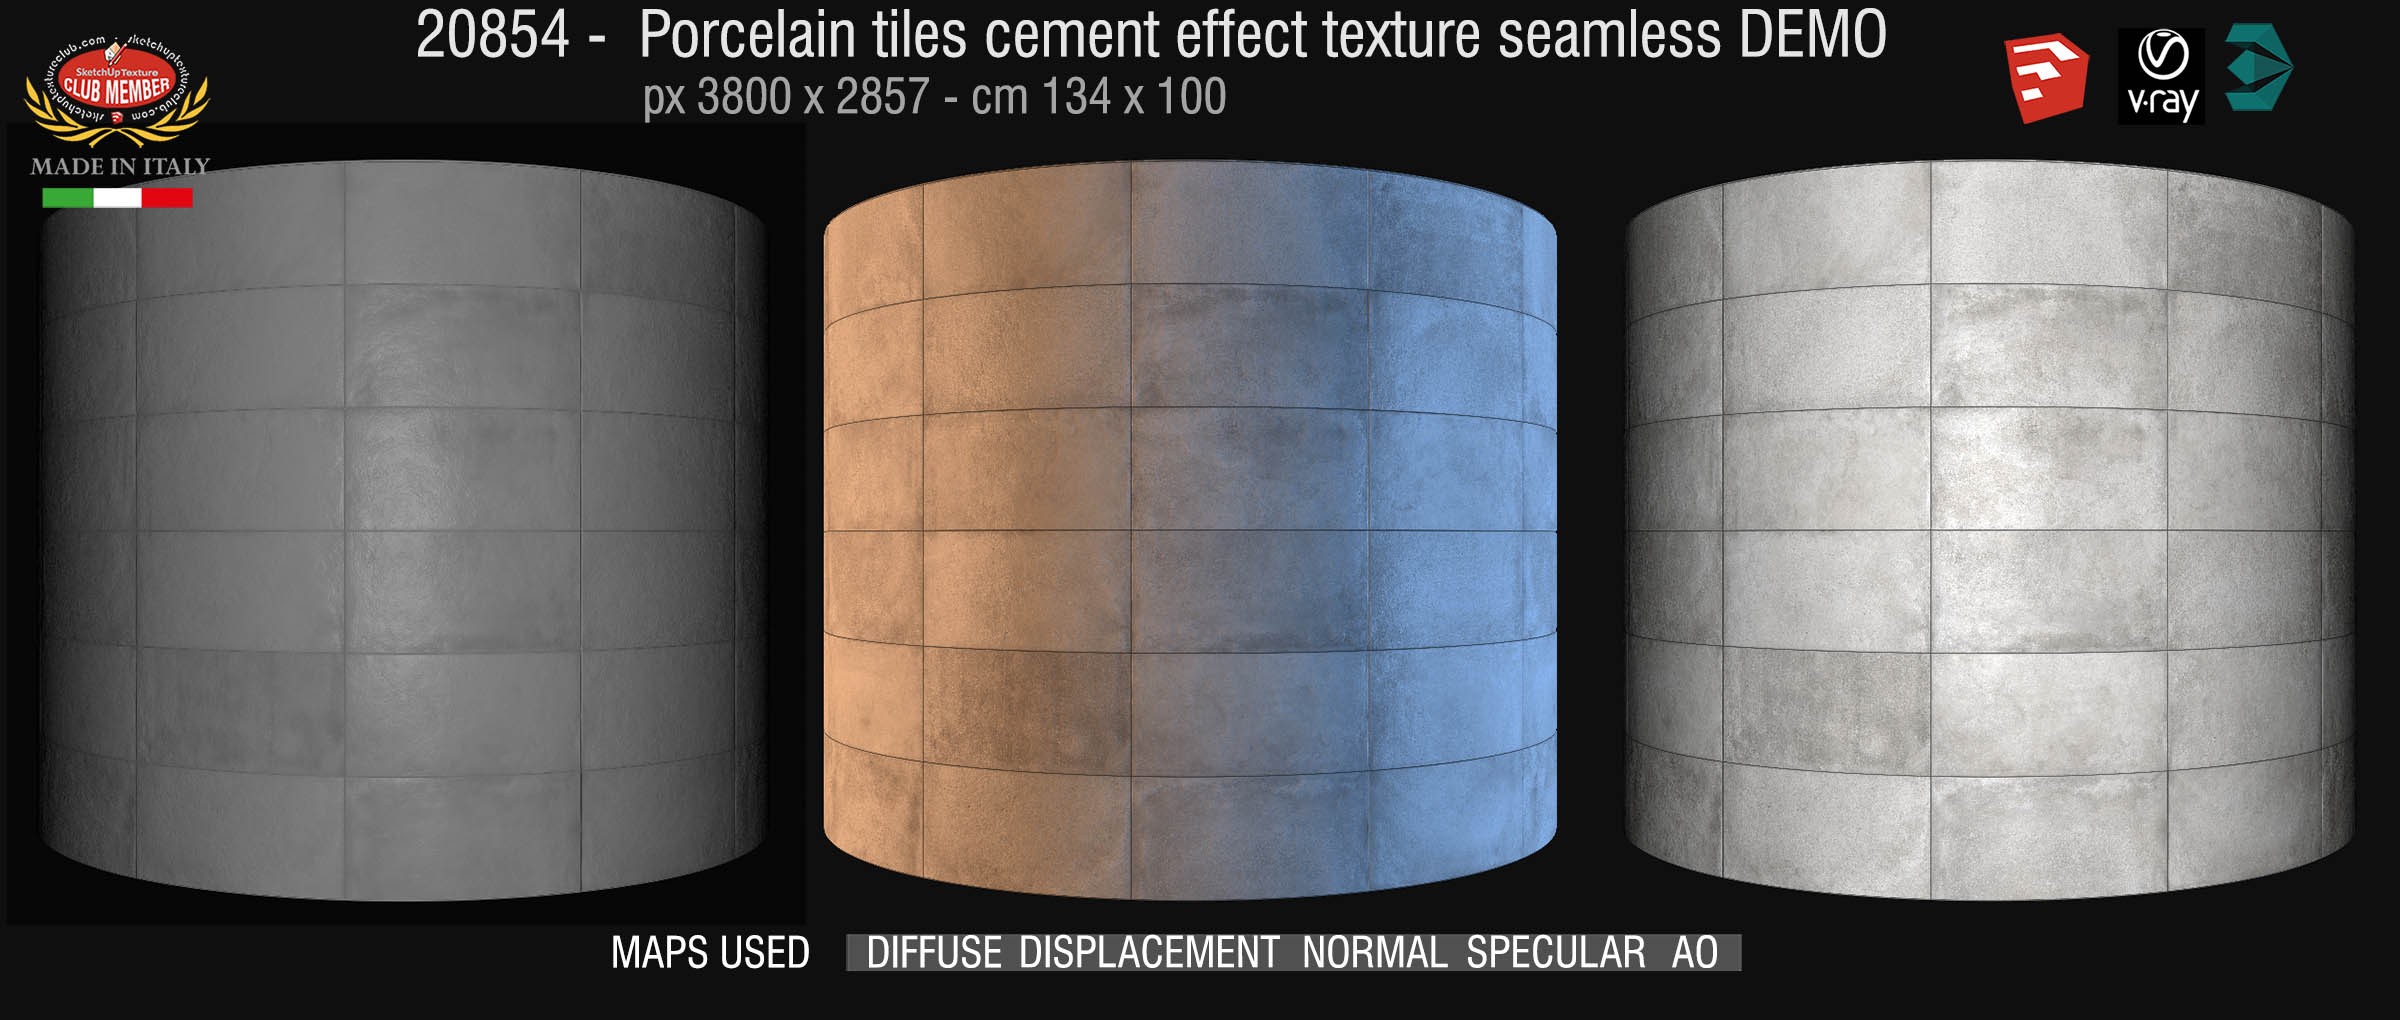 20854 HR Porcelain tiles cement effect texture seamless + maps DEMO